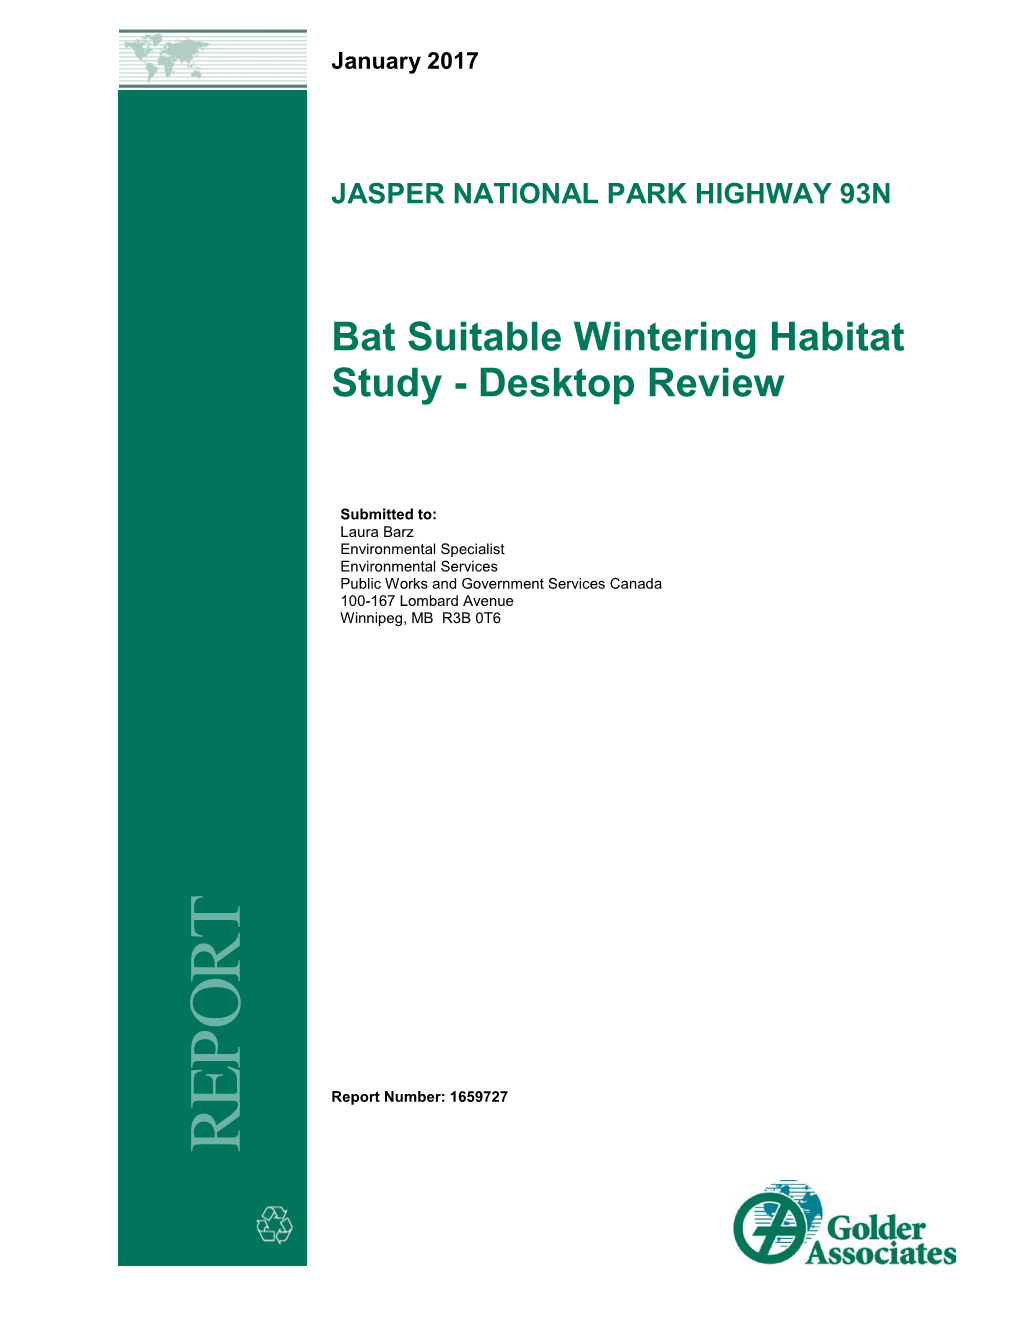 Bat Suitable Wintering Habitat Study - Desktop Review